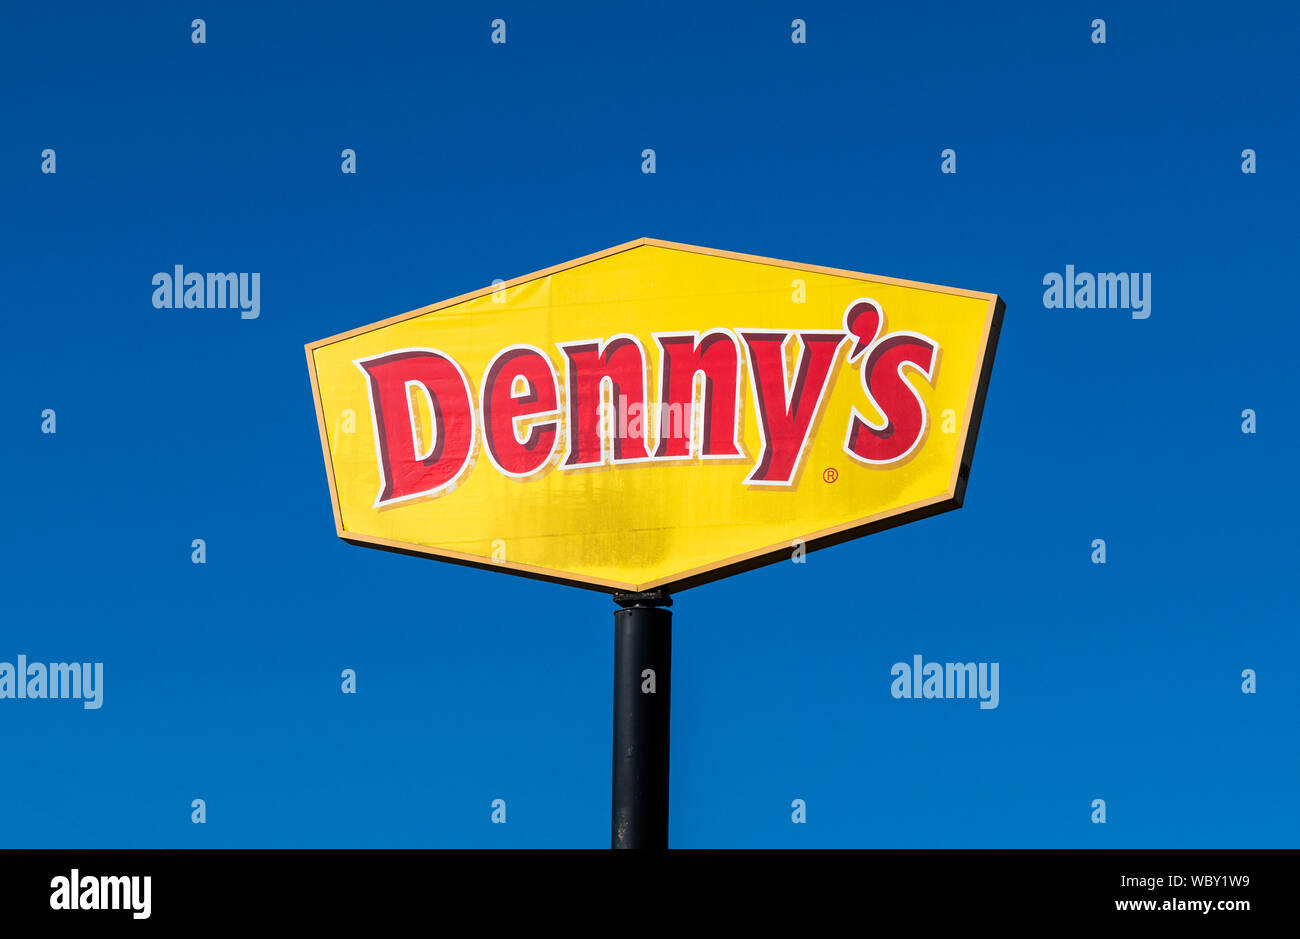 Denny's American restaurant chain, USA. Stock Photo